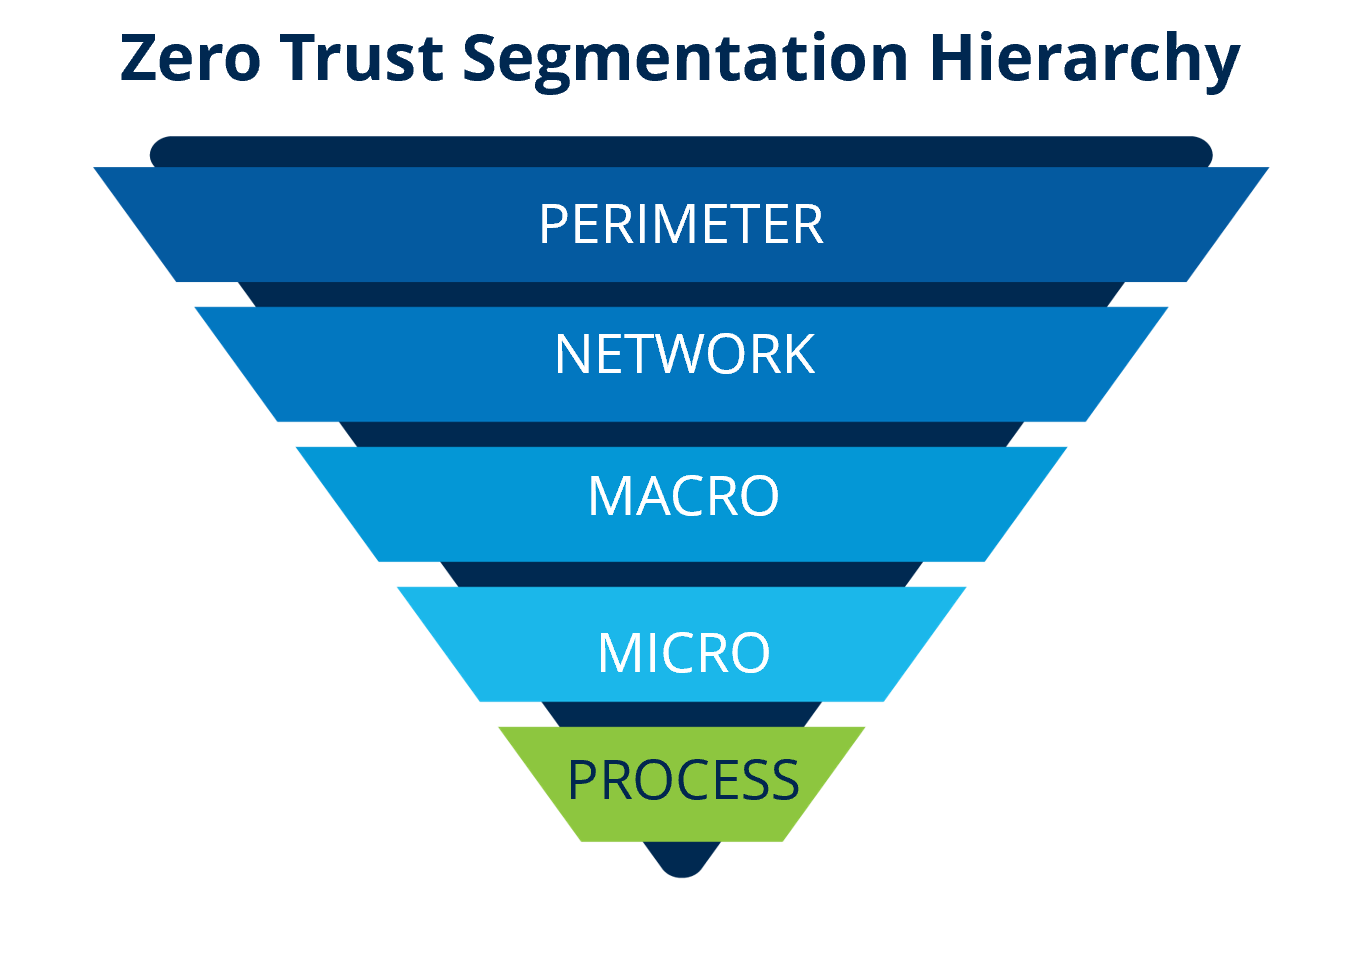 Zero Trust Segmentation Hierarchy